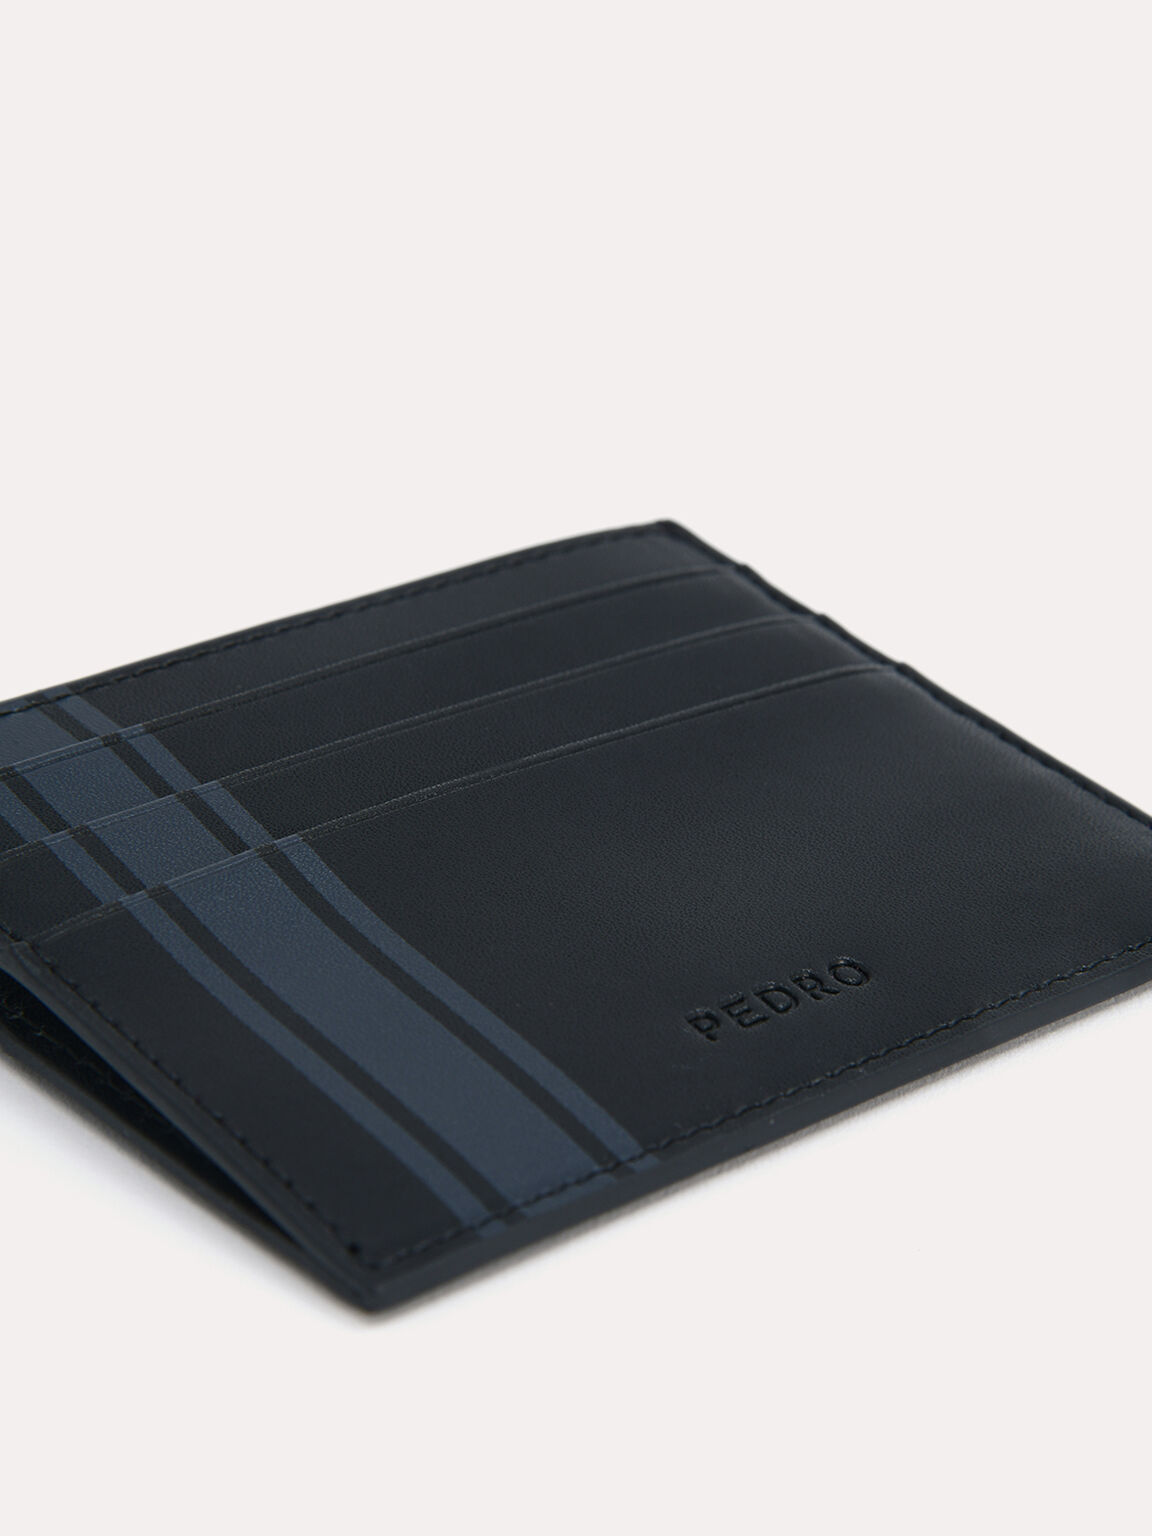 Two-Tone Leather Cardholder, Black, hi-res